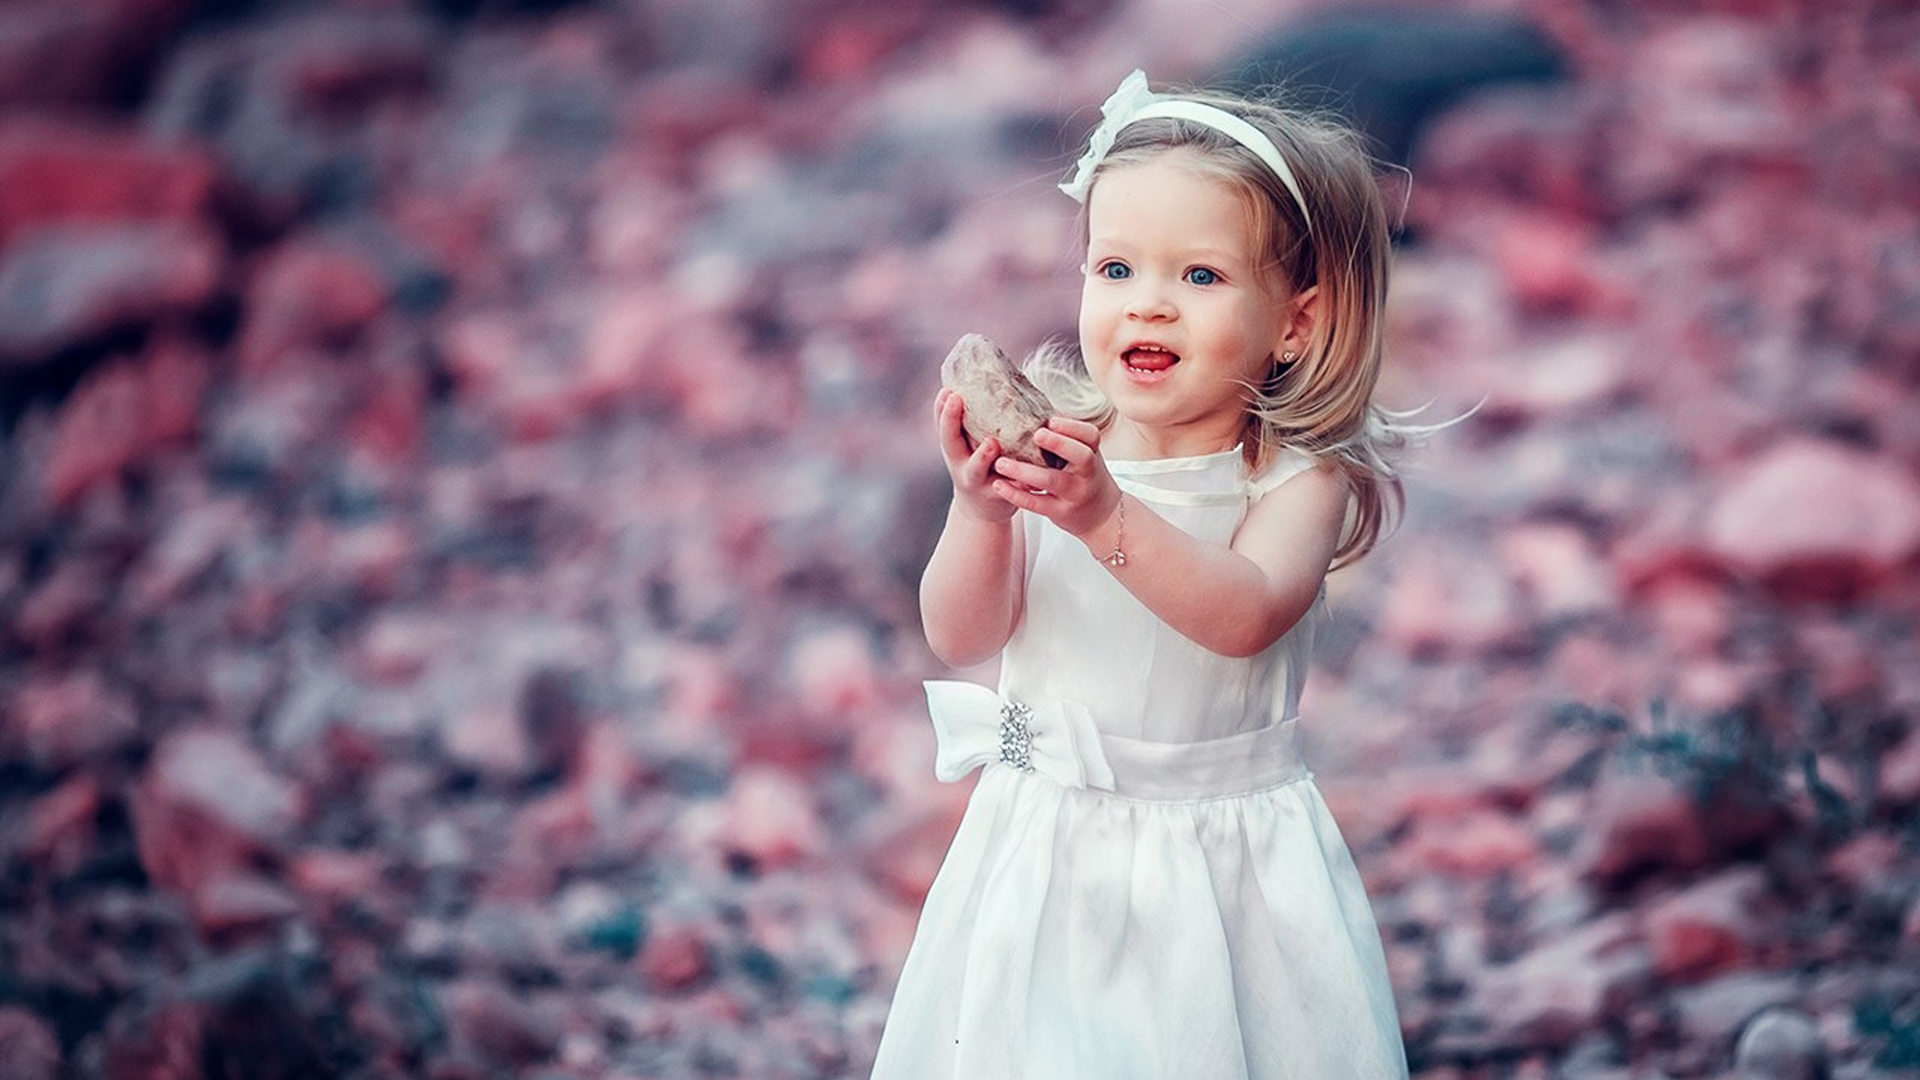 Beautiful Little Girl Is Standing In Blur Colorful Wallpaper Wearing White Dress HD